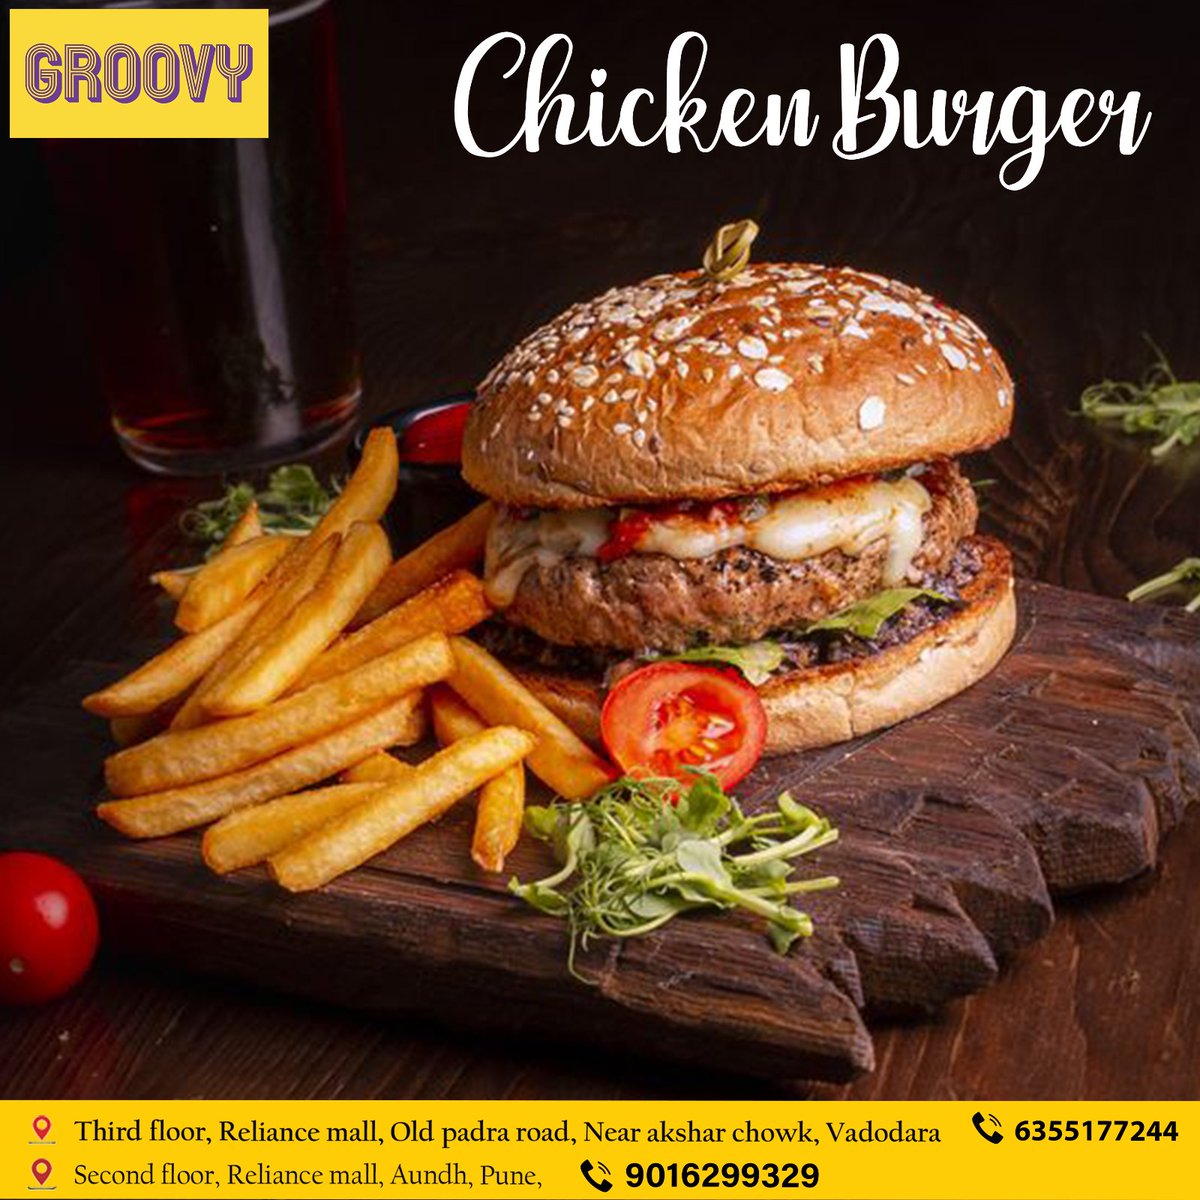 #groovy #burger #burgers #spicyfood #food #foodie #fries #chicken #nonvegburger #foodstagram #creamy #crunchy
#burgertime #bestburgerintown #bestburger #chickenburger #burgerlover #yummy #foodlover #fastfood #delicious #zomato #swiggy #Gujarat #maharashtra